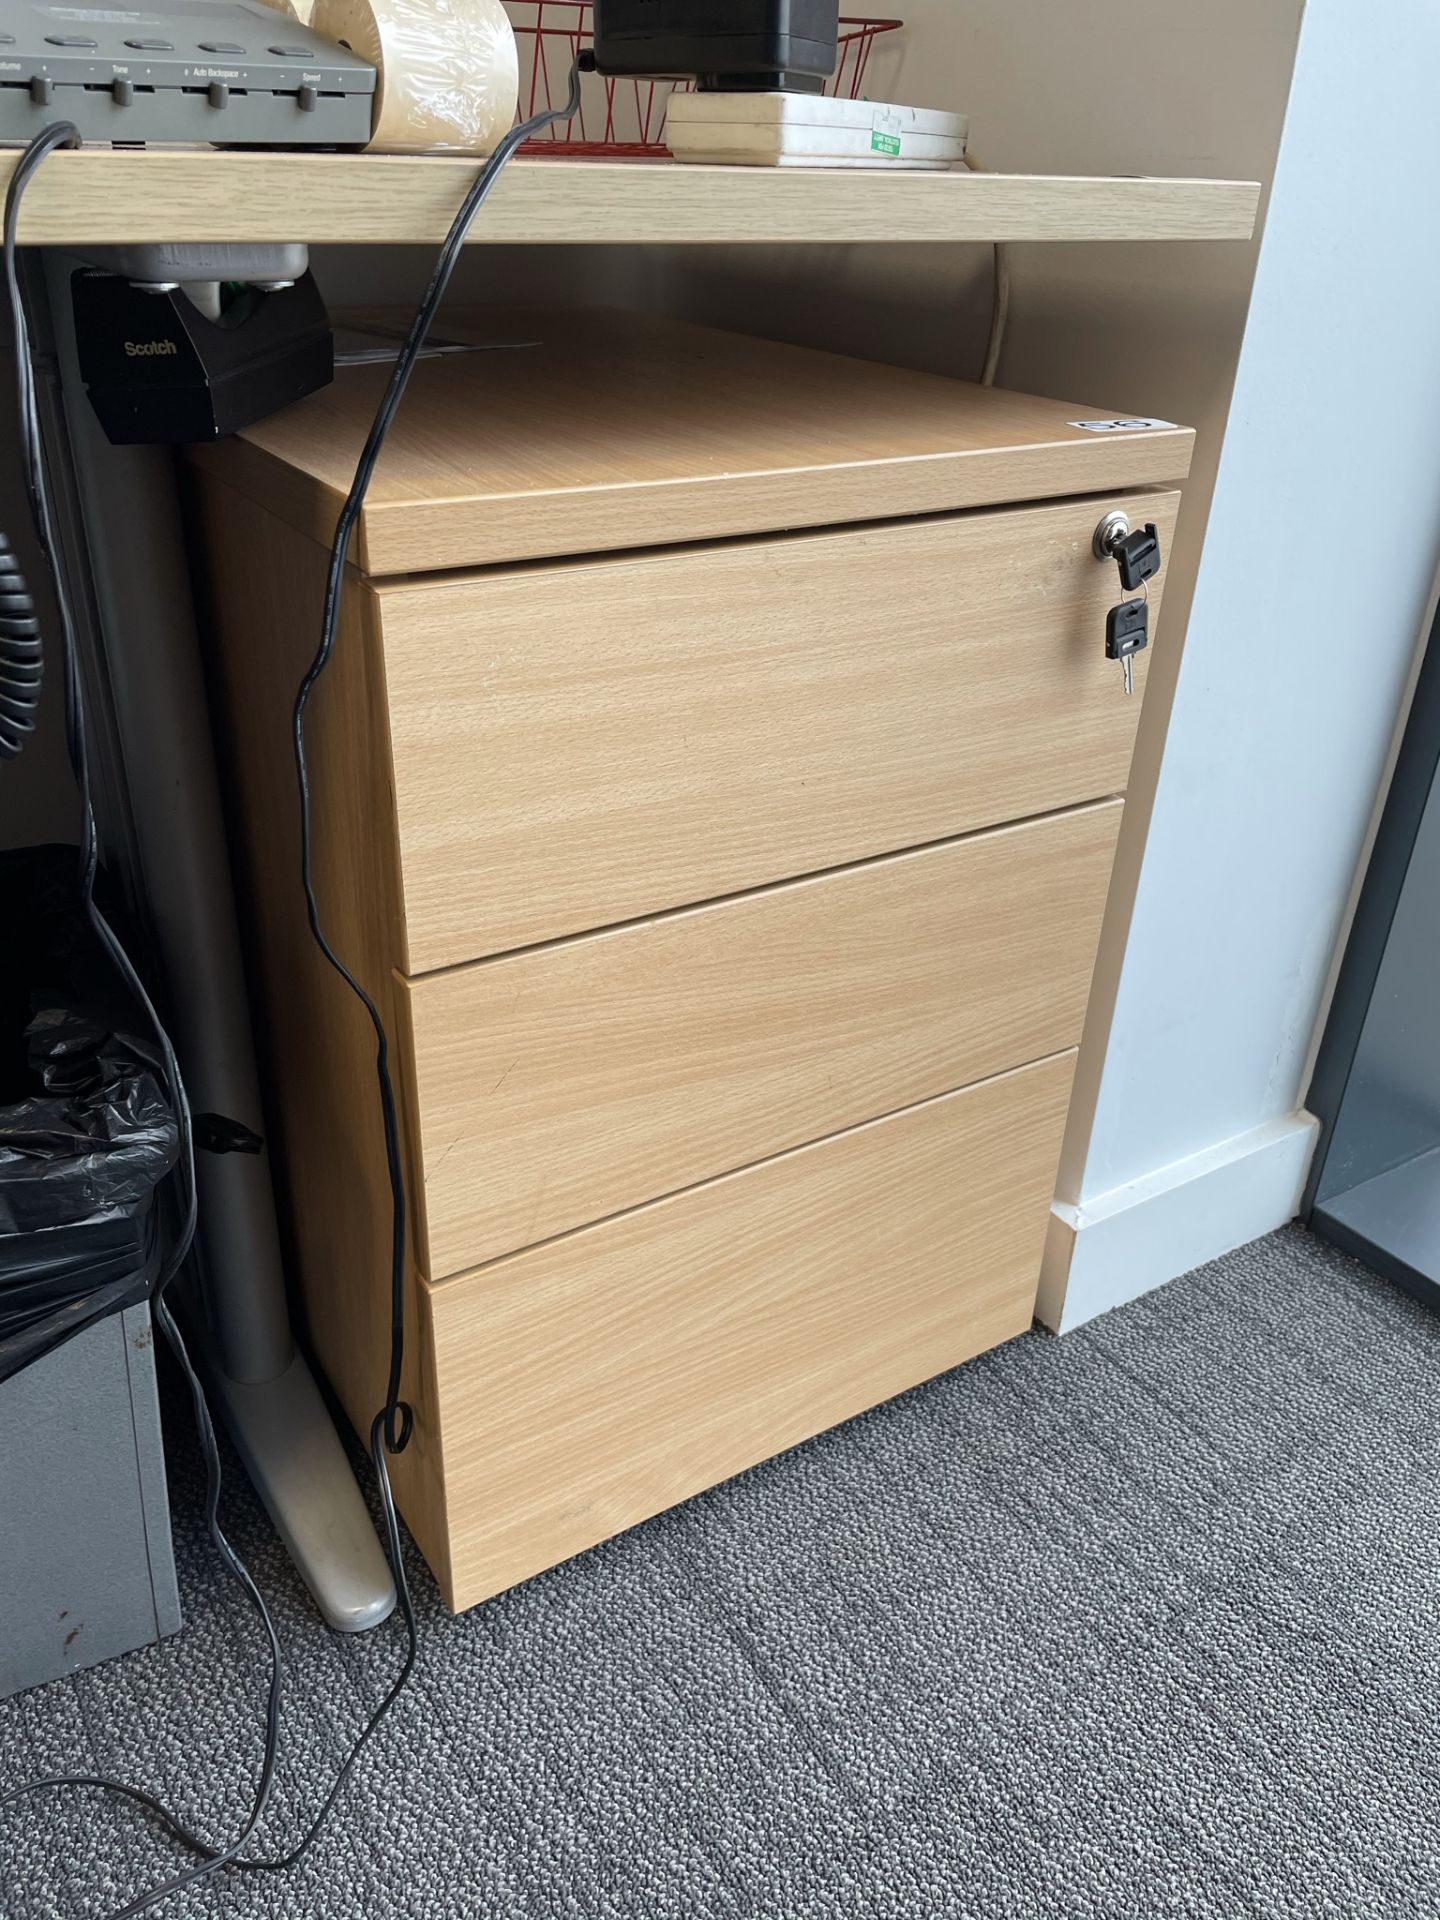 2 x 3 Drawer Under Desk Pedestal Units | NOT MATCHING - Image 2 of 2